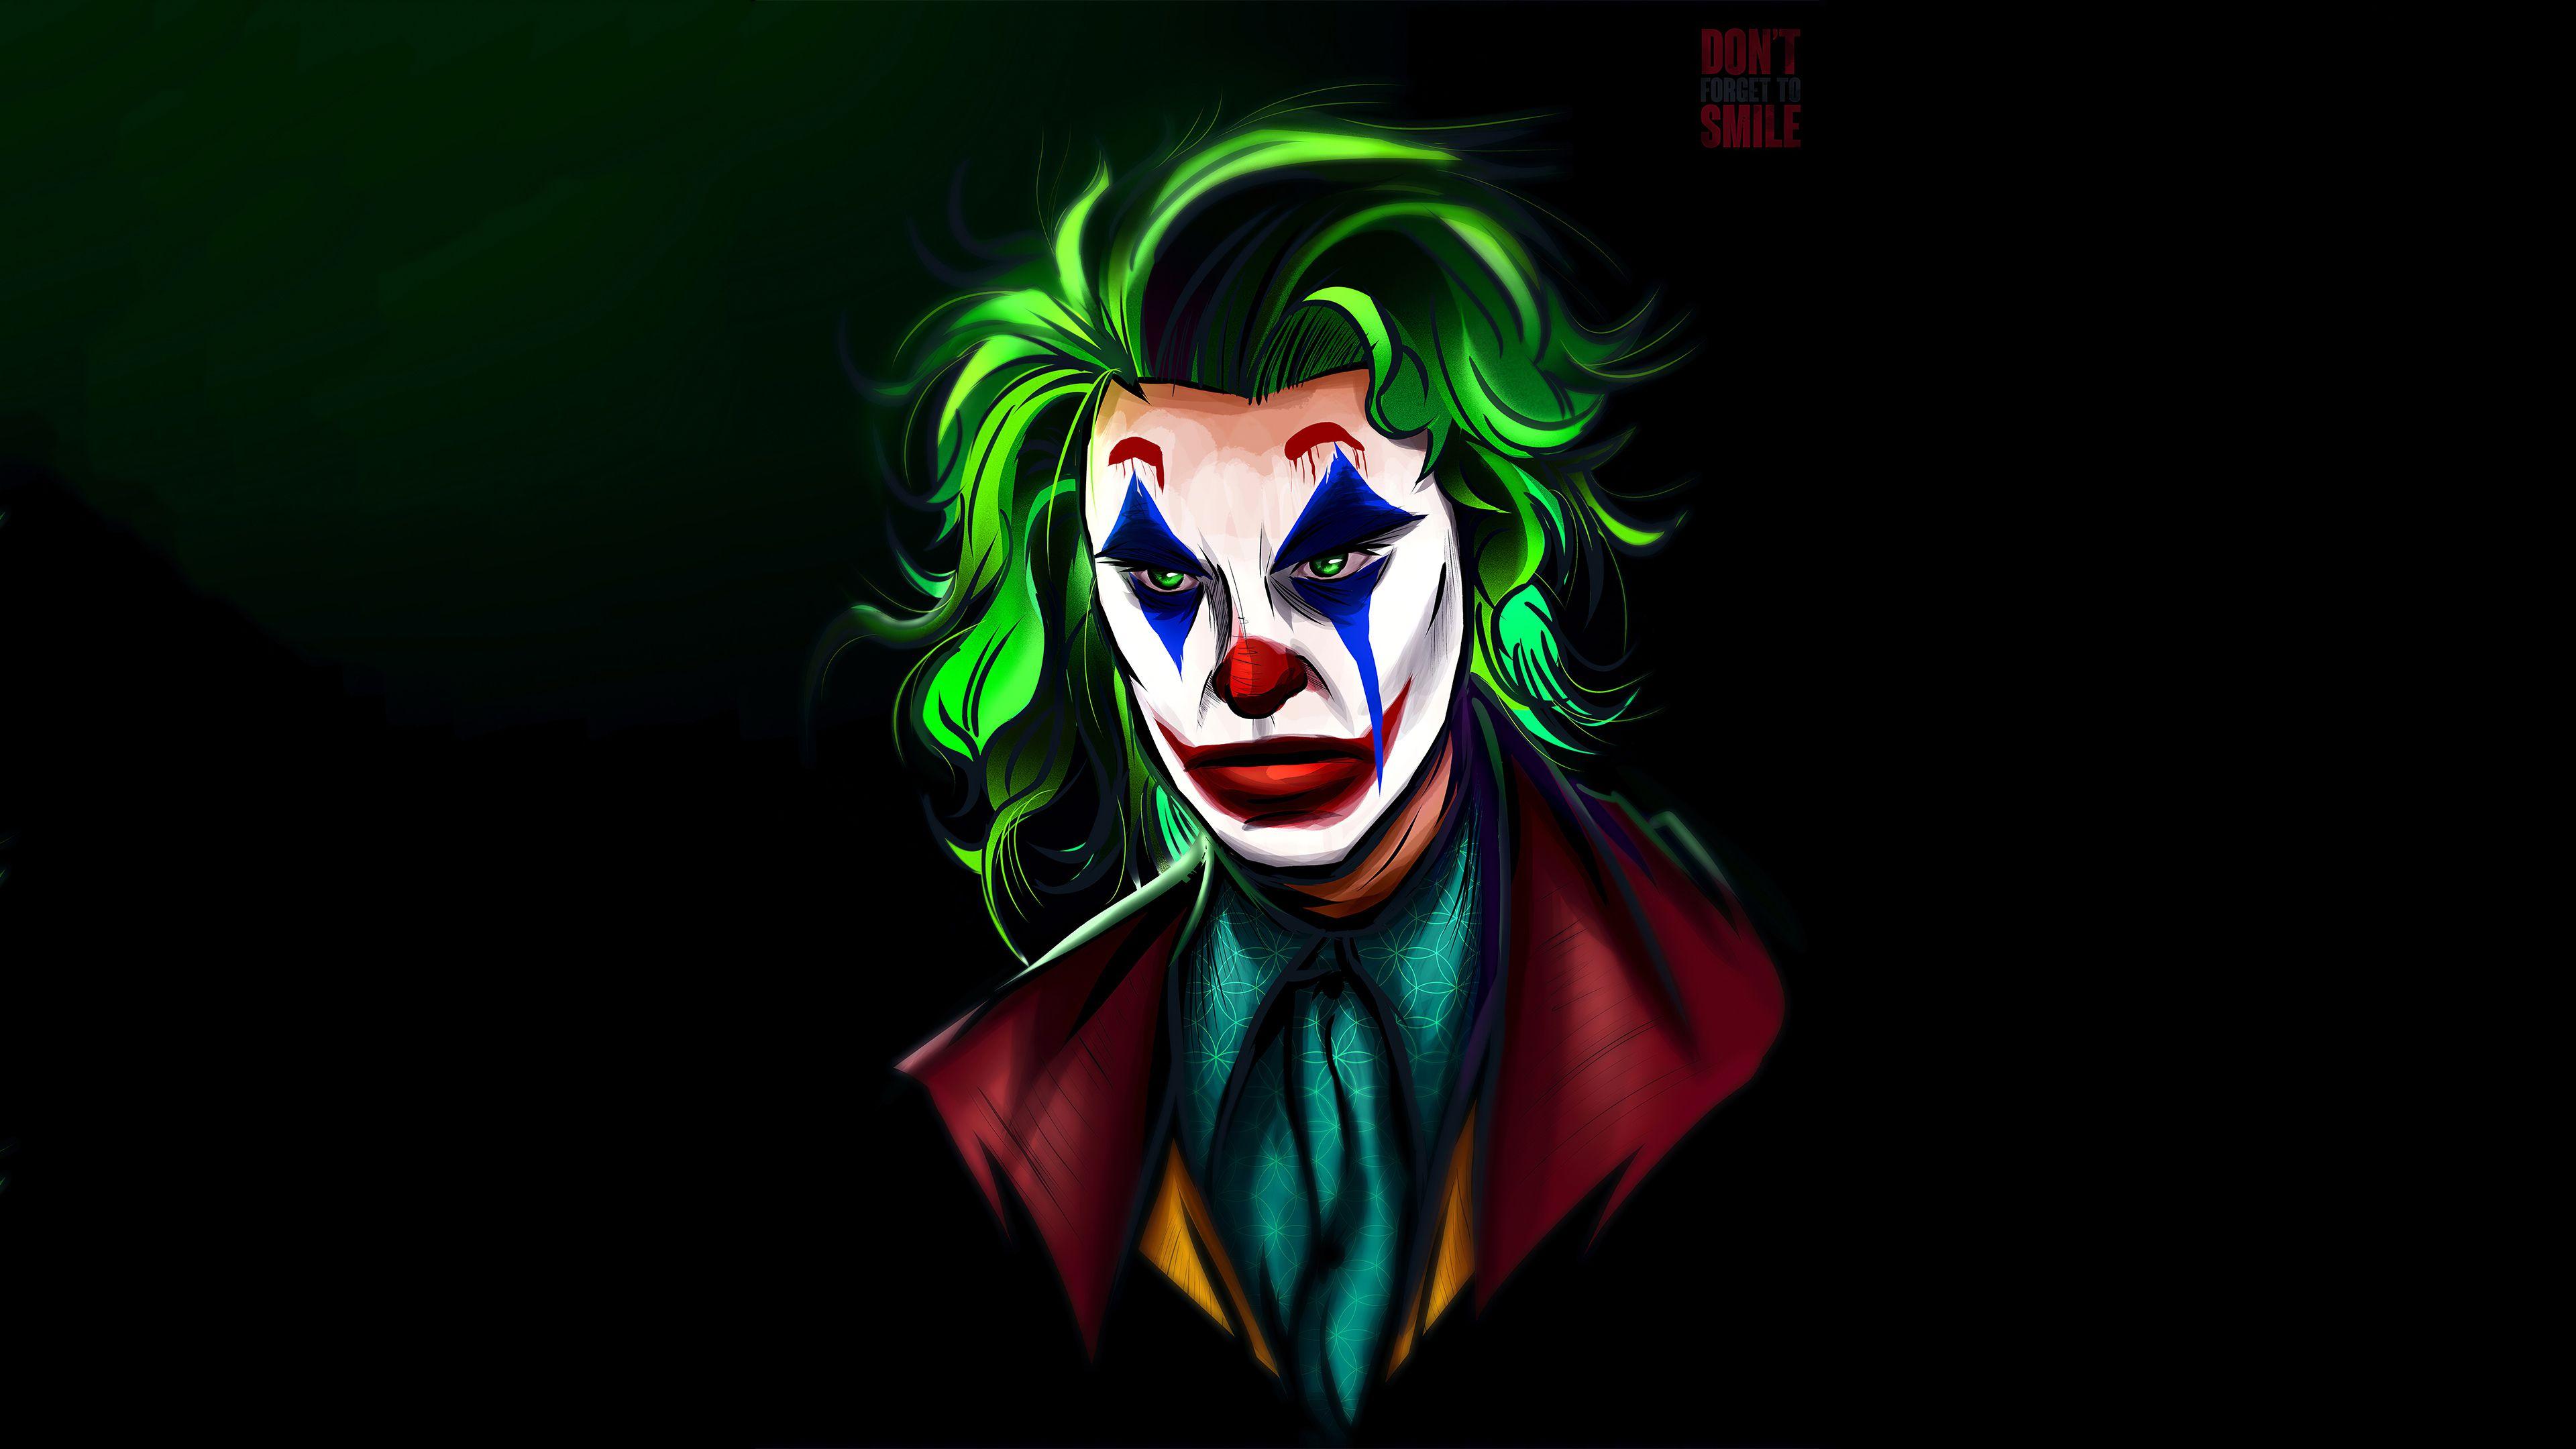 Original Joker Wallpapers - Top Free Original Joker Backgrounds